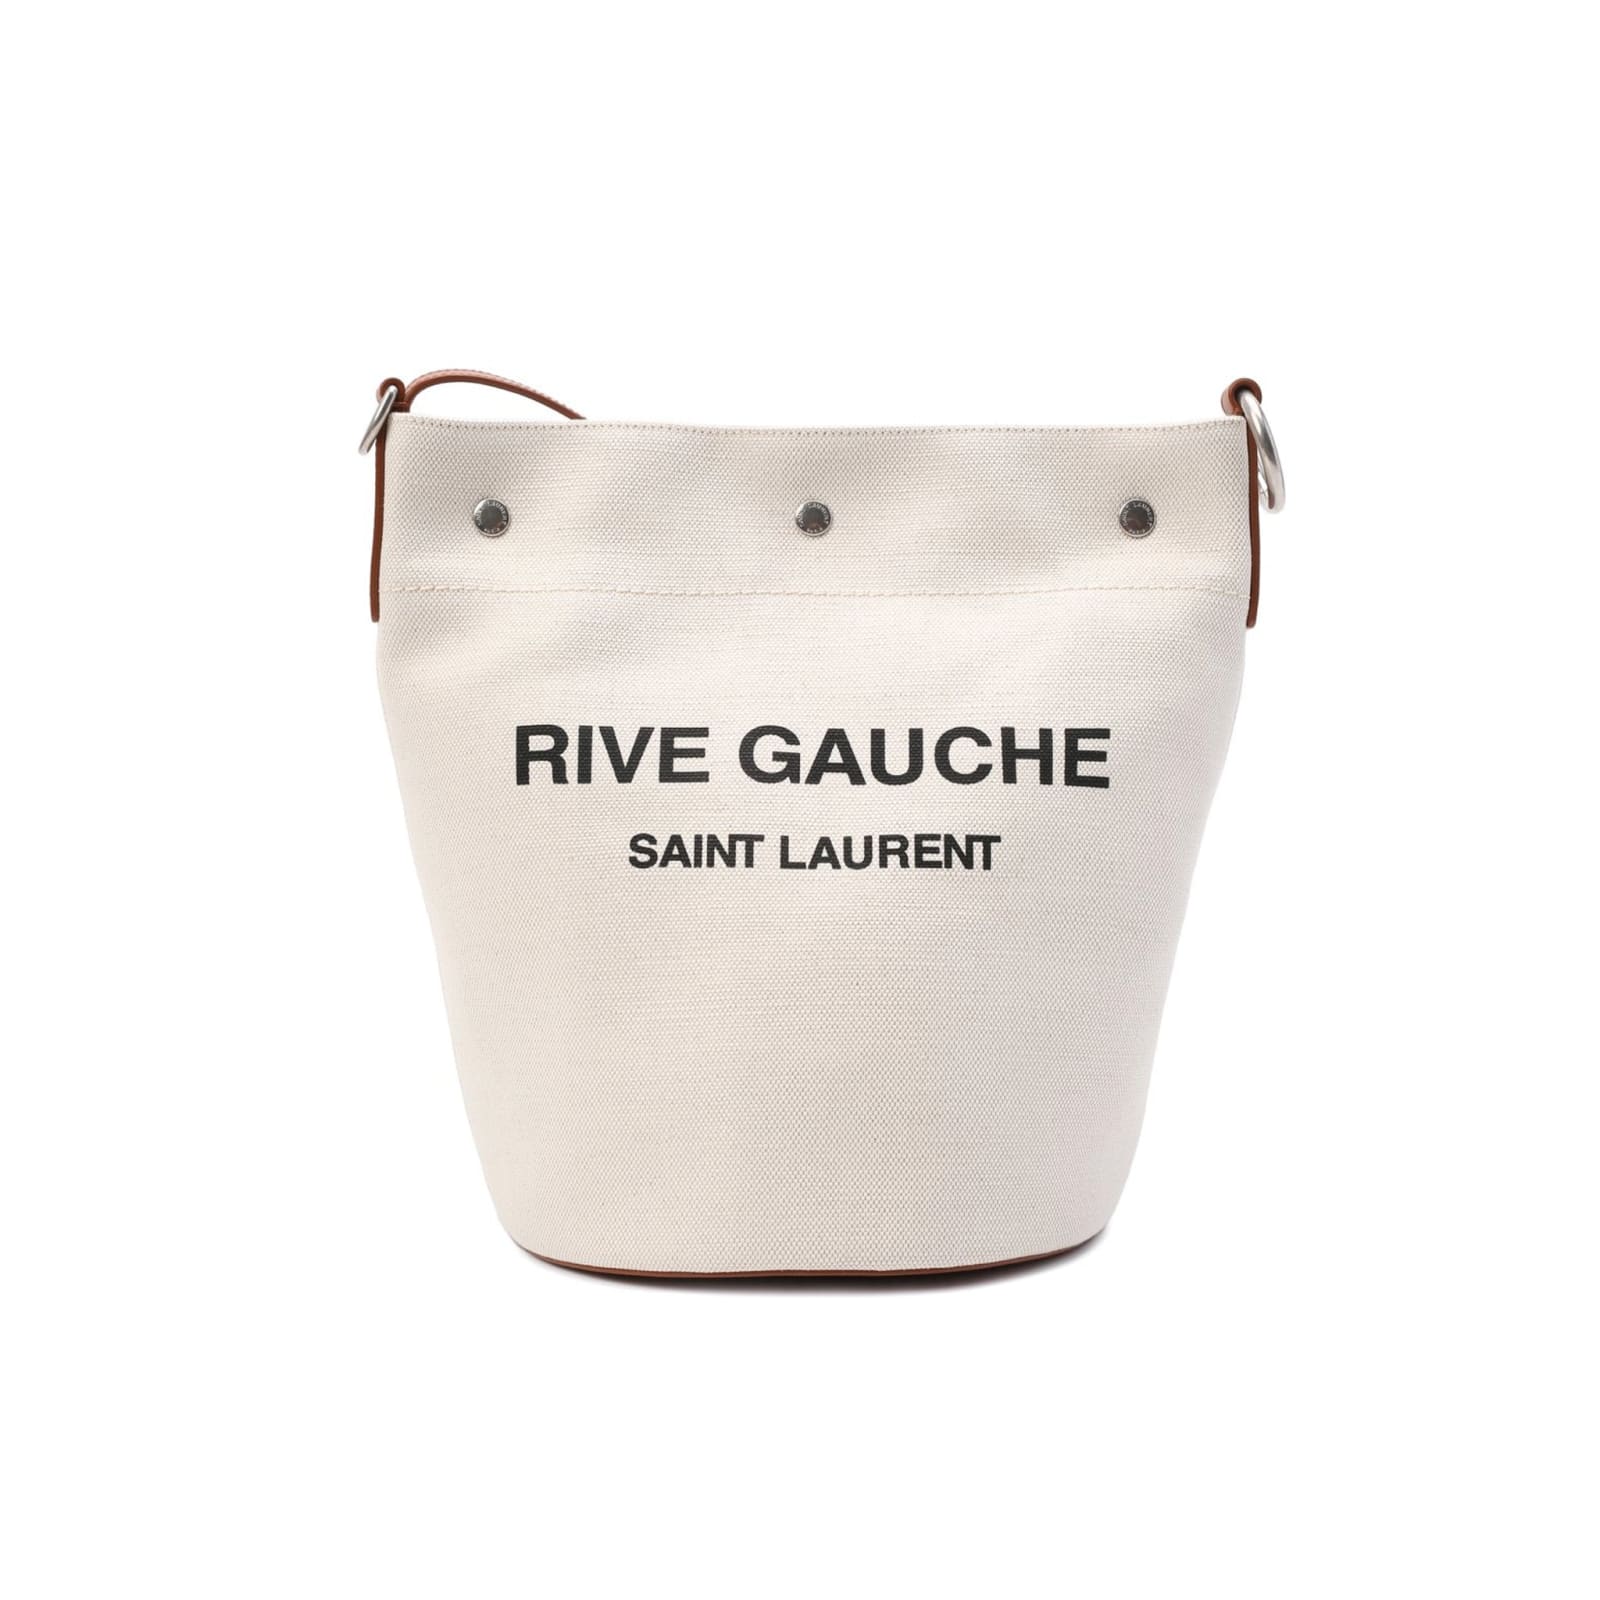 Saint Laurent Rive Gauche Bag